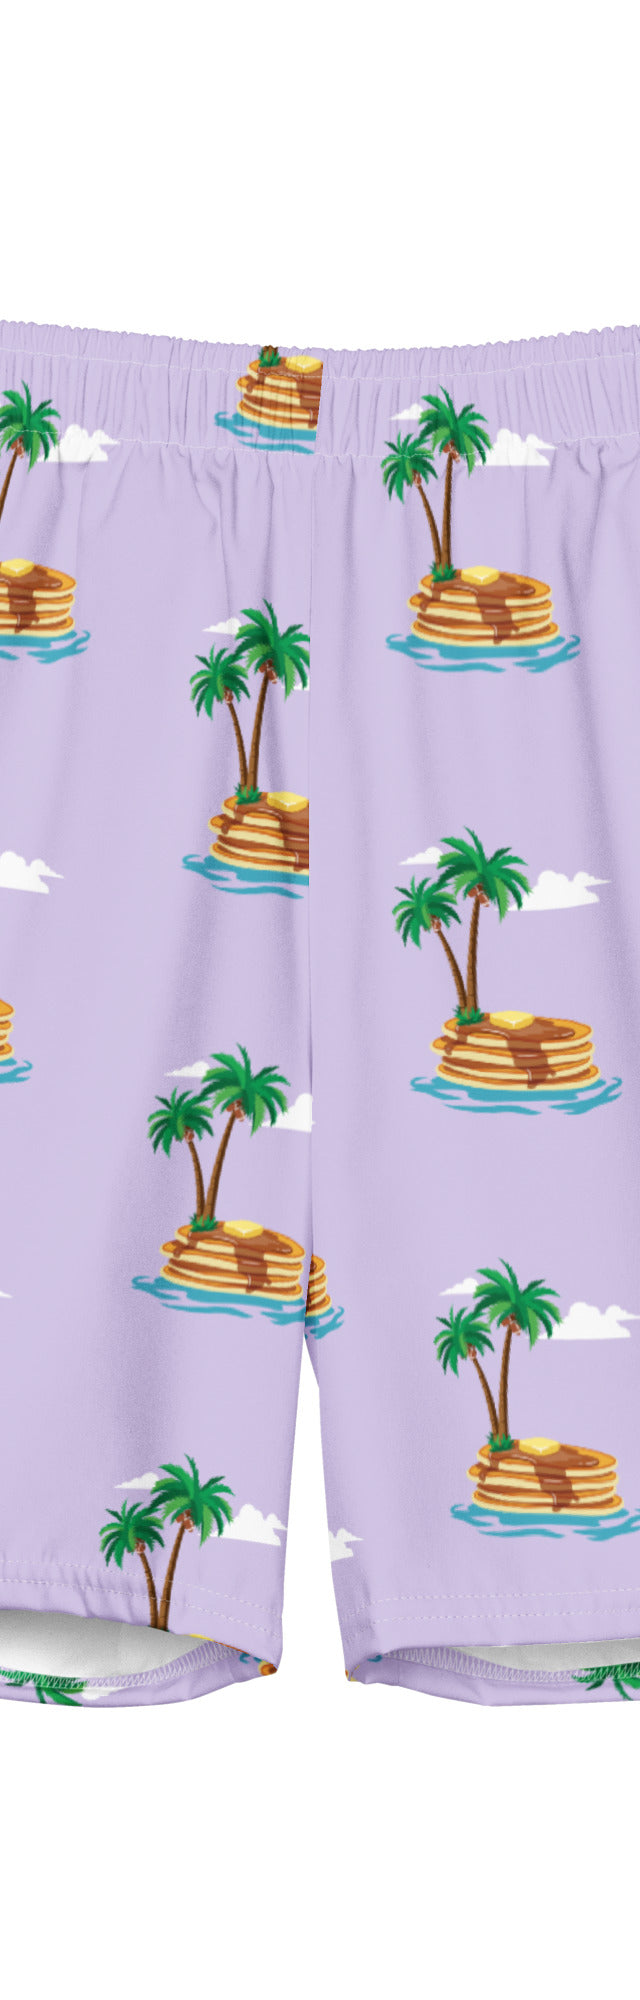 Pancakes and Palm Trees - Purple